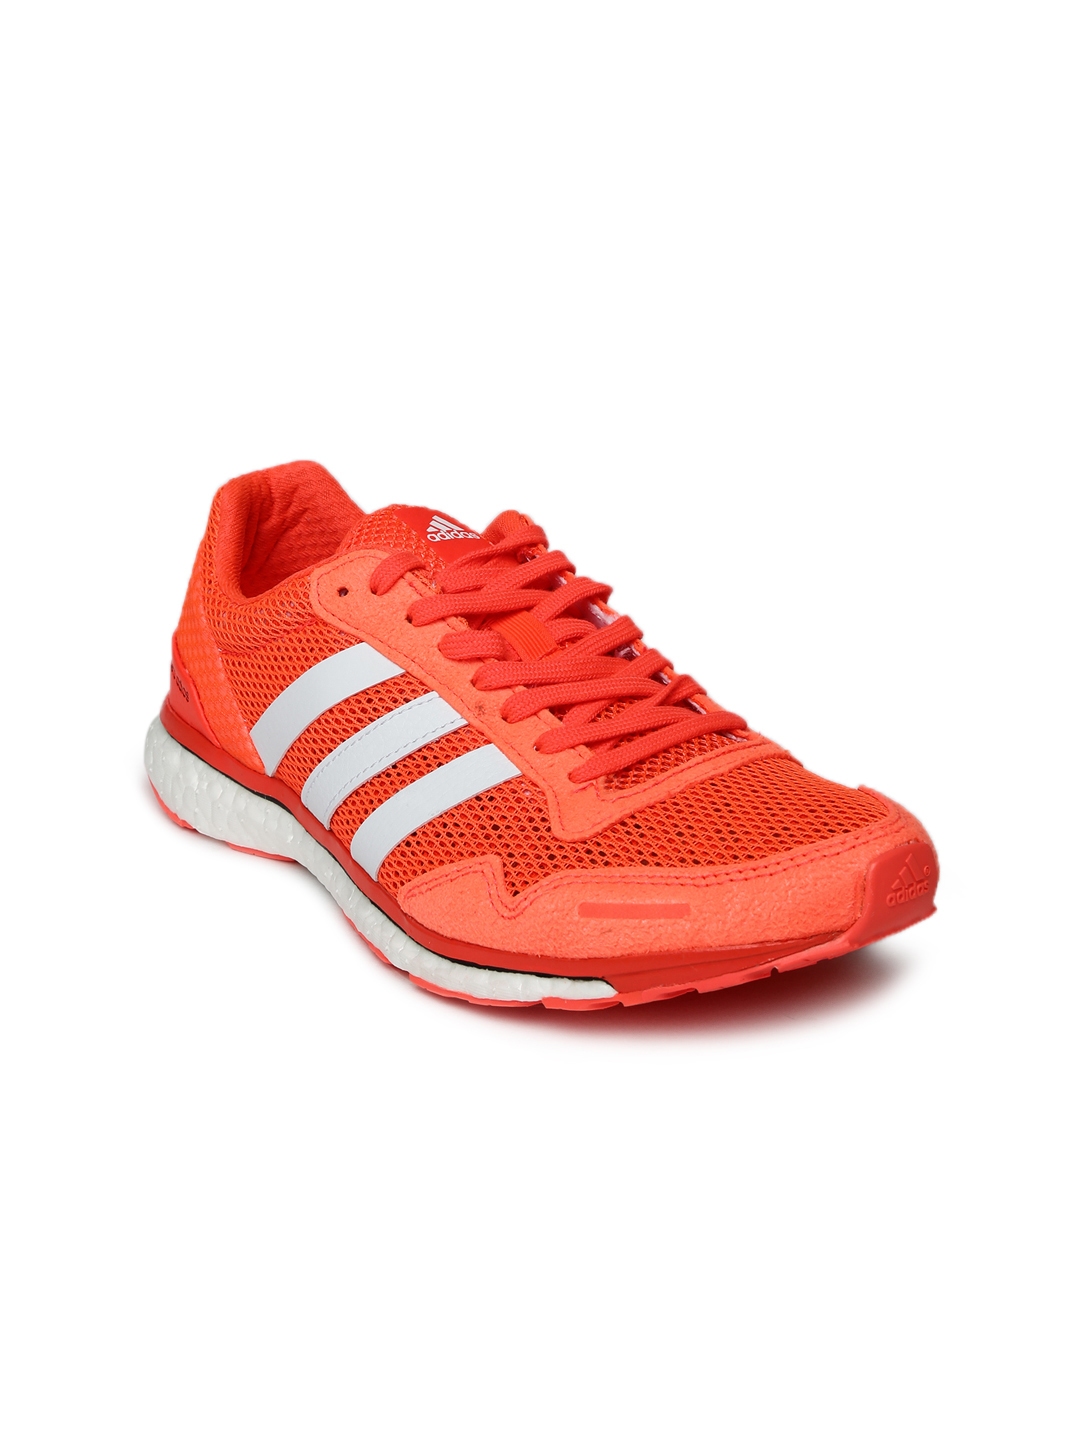 Buy ADIDAS Women Neon Orange Adizero Adios 3 Running Shoes - Sports ...